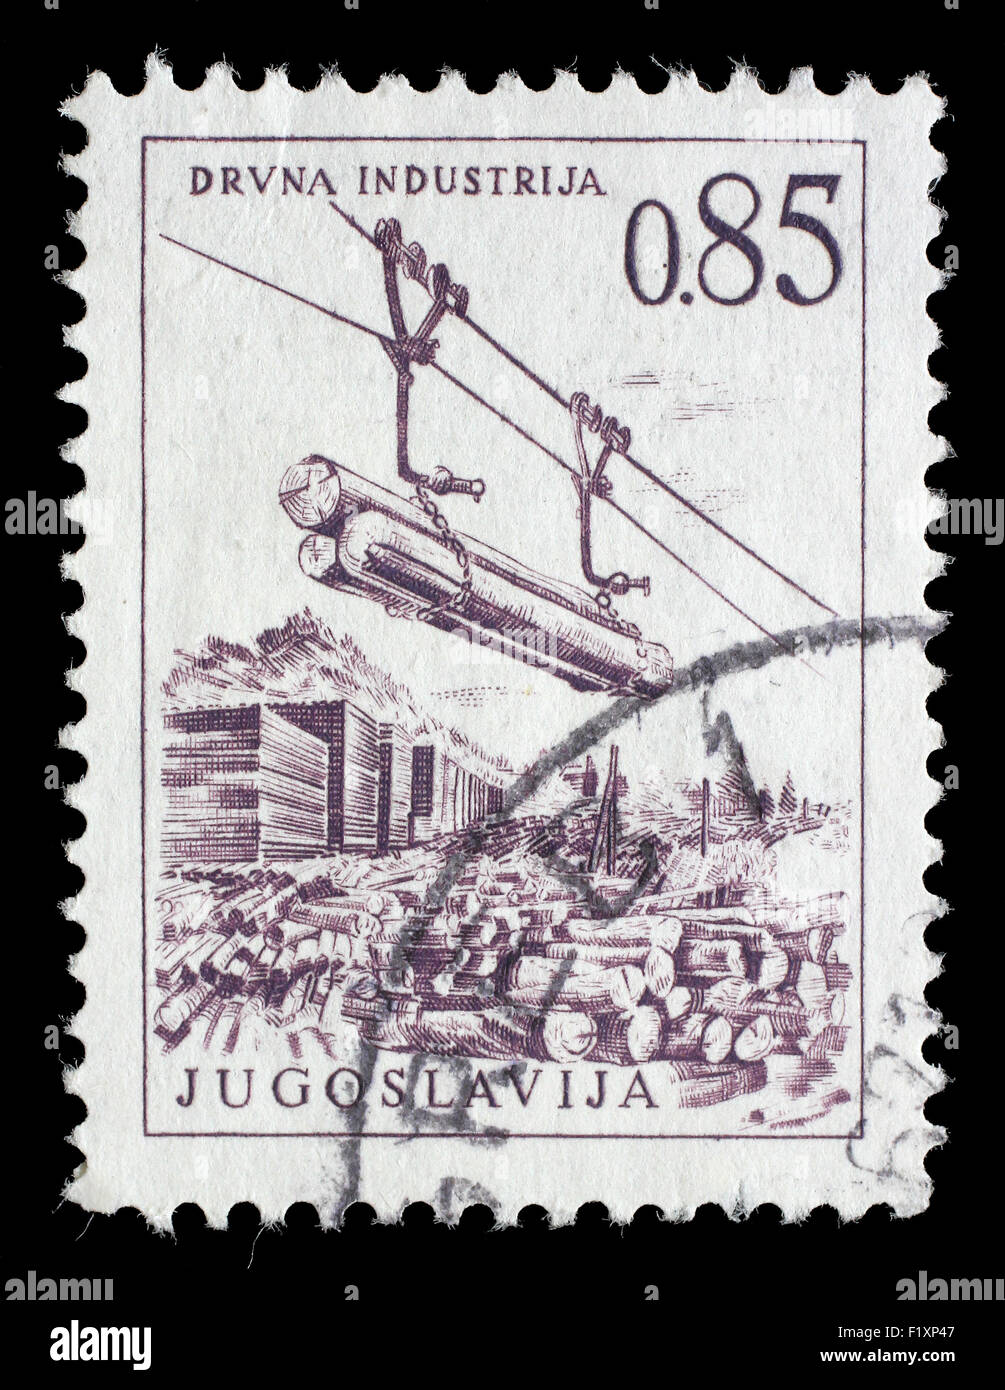 Stamp printed in Yugoslavia shows lumber industry, circa 1966 Stock Photo